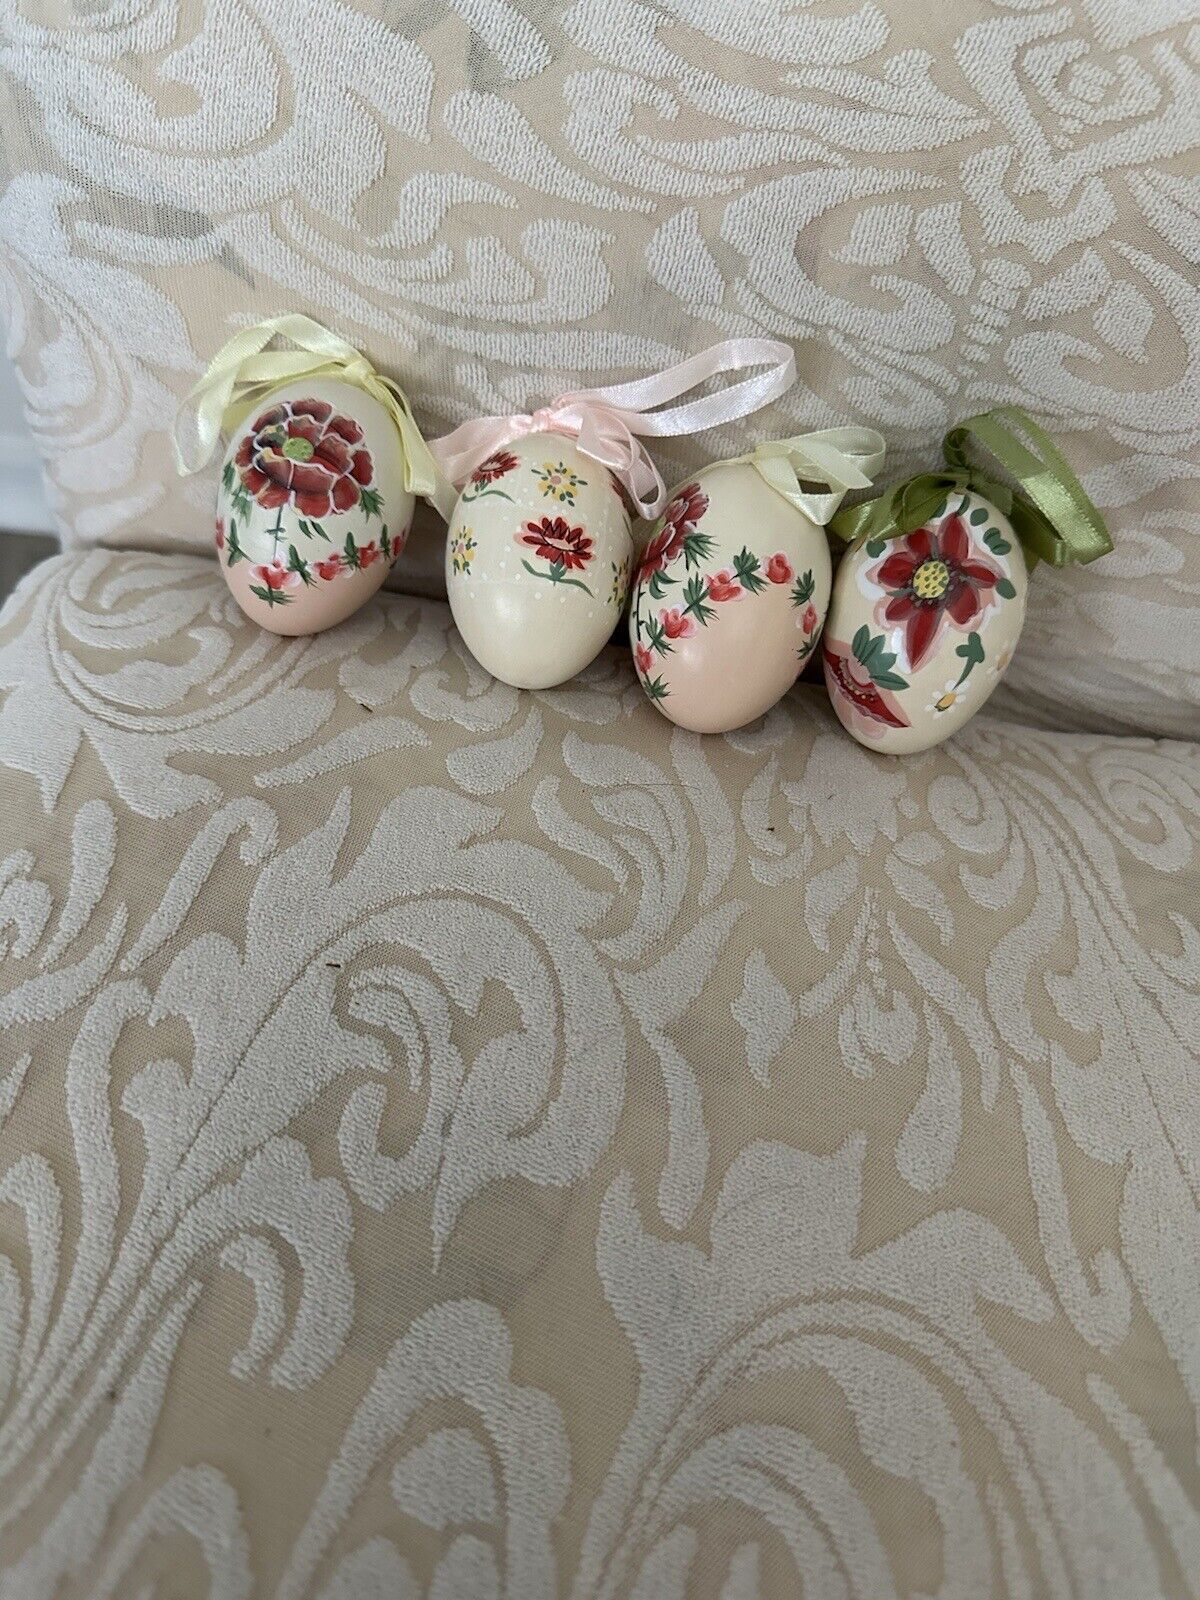 Four Handpainted eggs